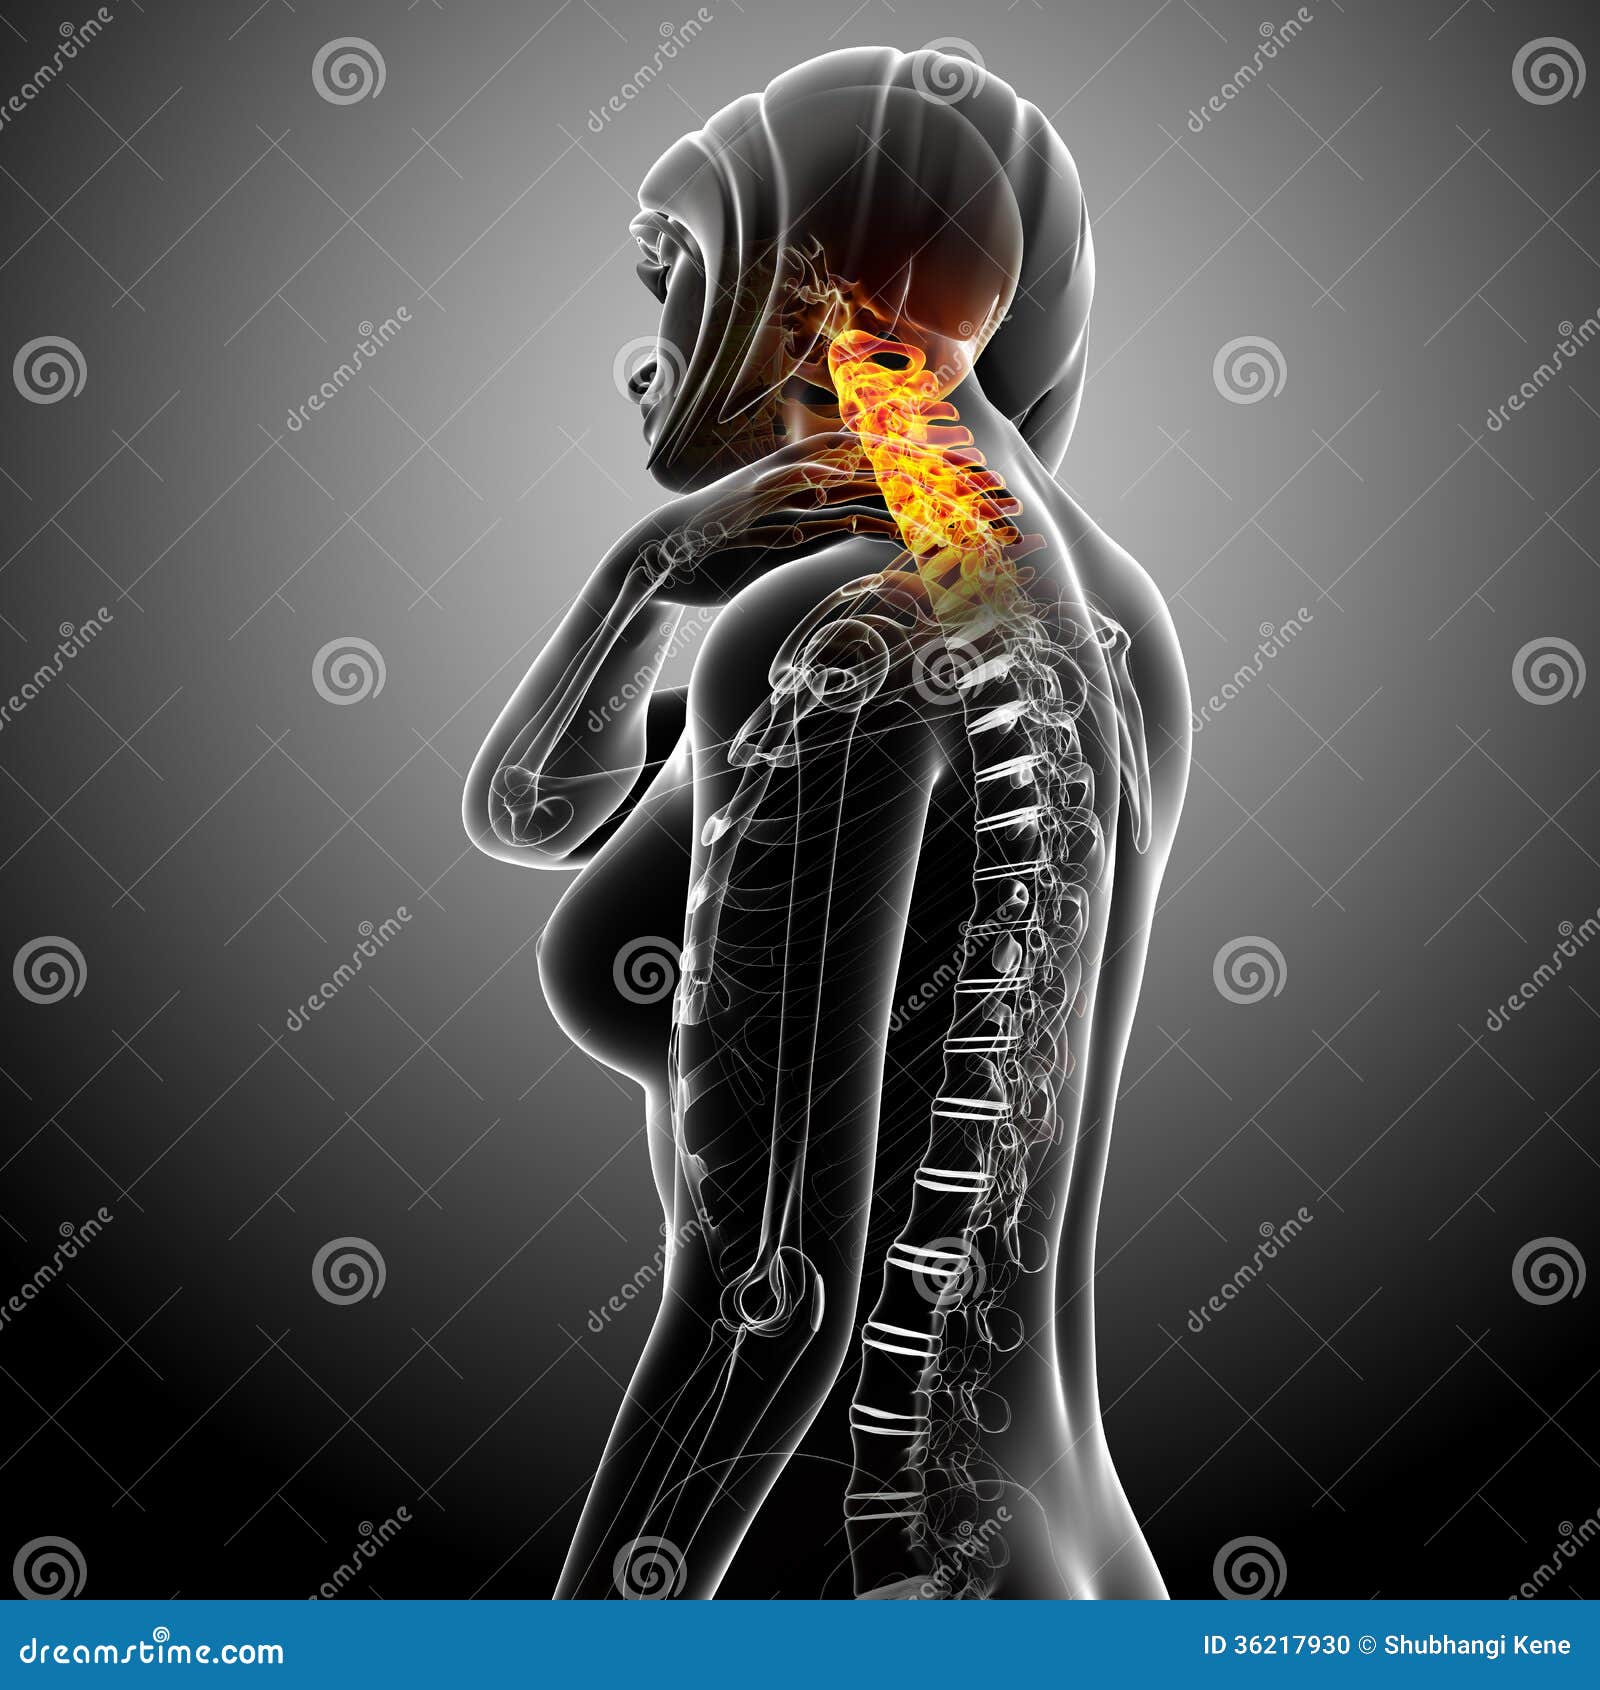 Female neck pain stock illustration. Illustration of graphic - 36217930